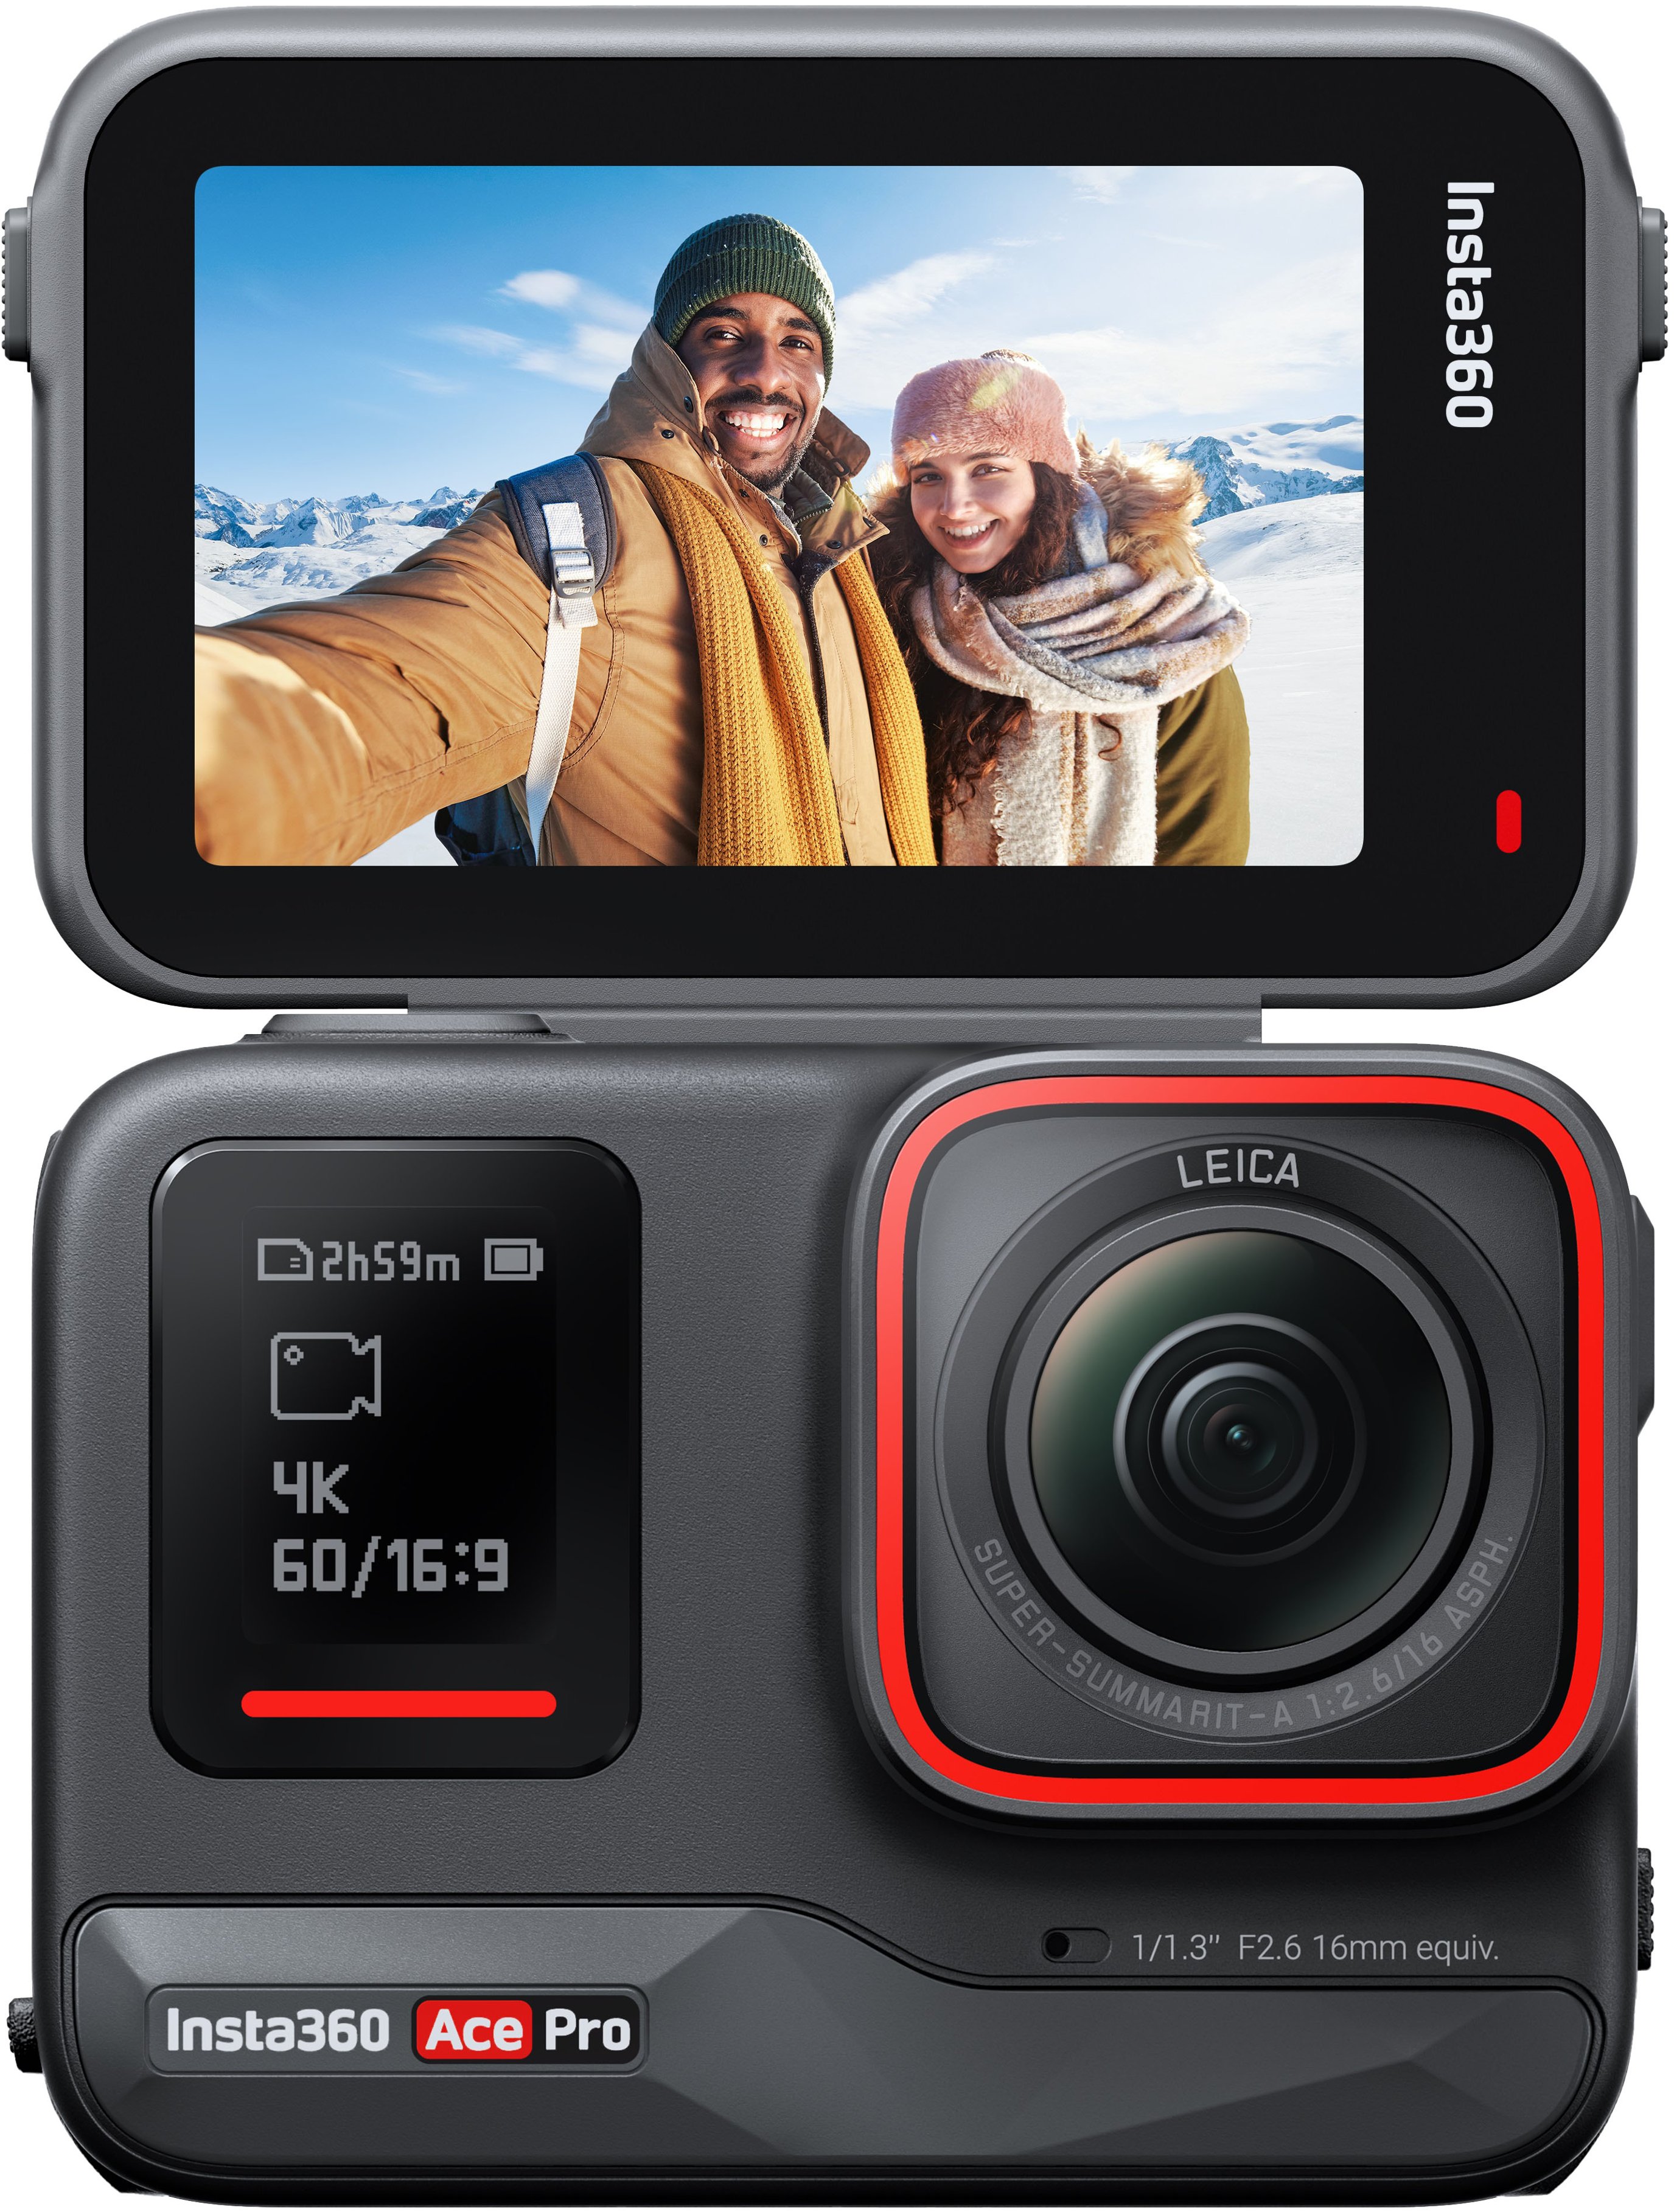 Insta360 Ace Series Action Cameras Released - Leica Lens, Flip